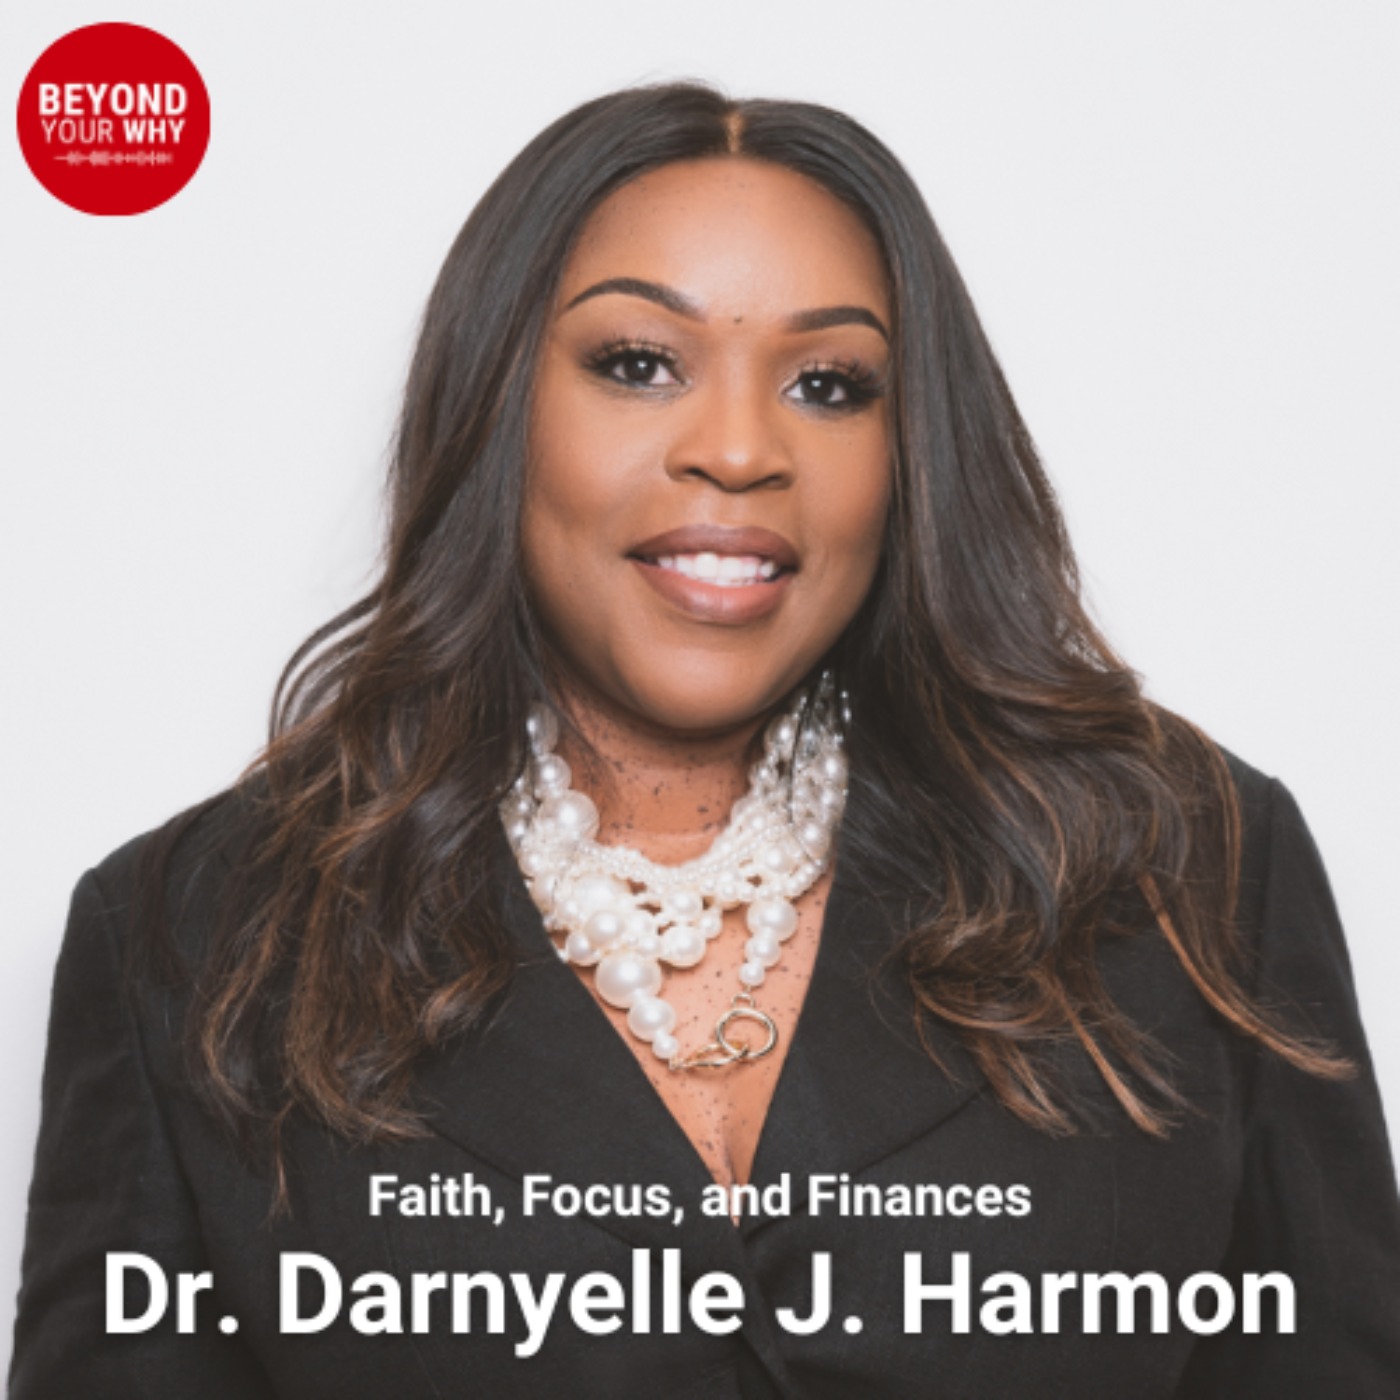 Faith, Focus, and Finance: 3 Pillars of Purposeful Business Success with Dr. Darnyelle J. Harmon